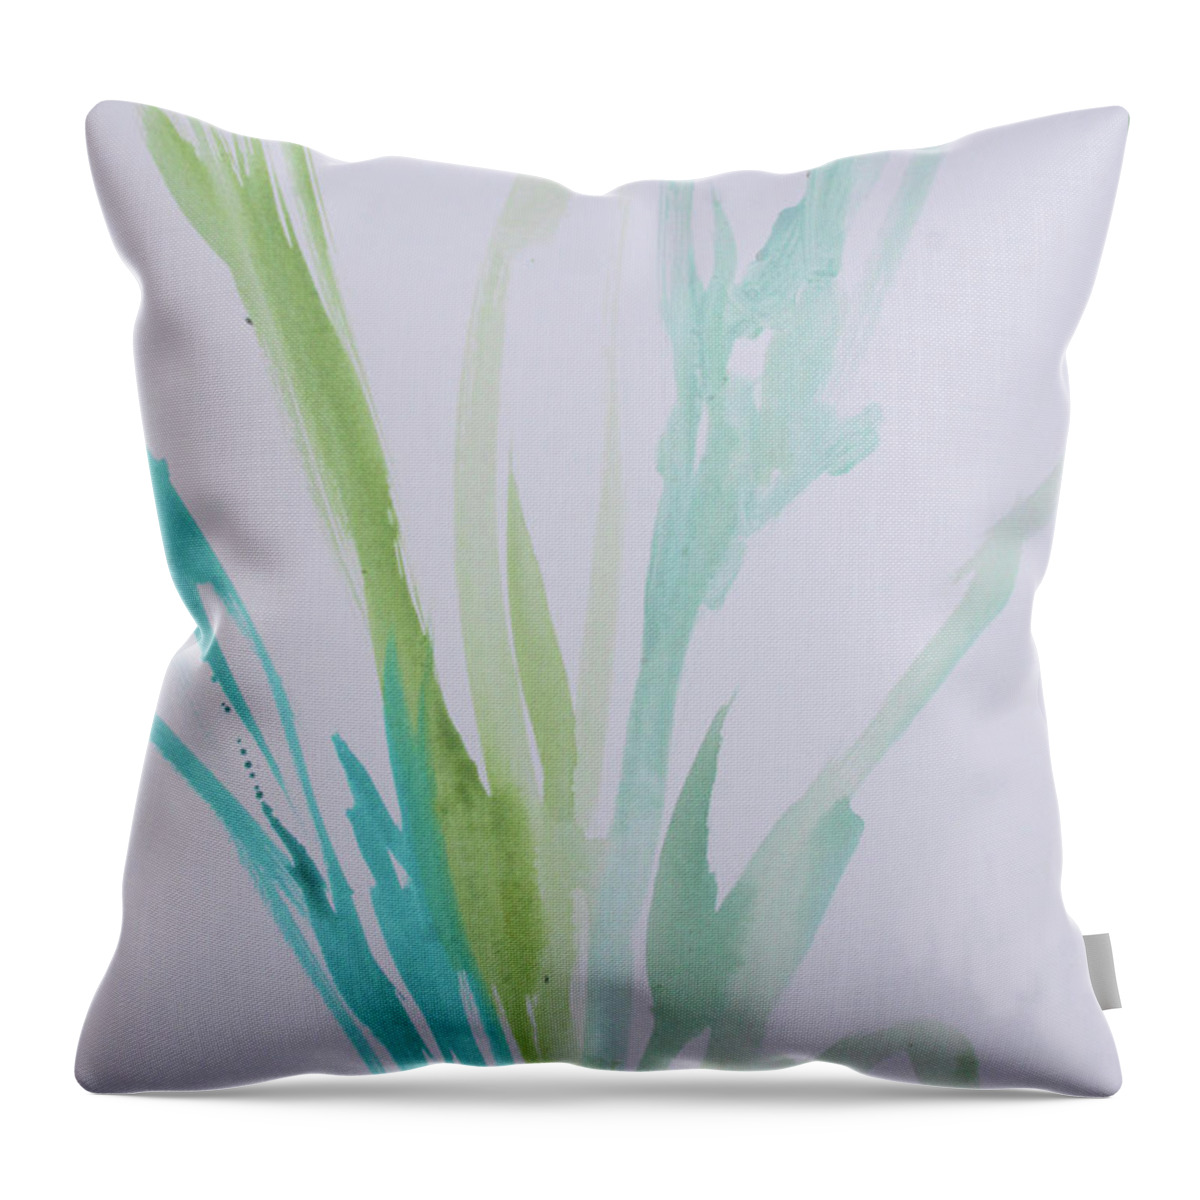 Azul Verdoso Throw Pillow featuring the painting Azul Verdoso Bamboo Rain by Robin Pedrero